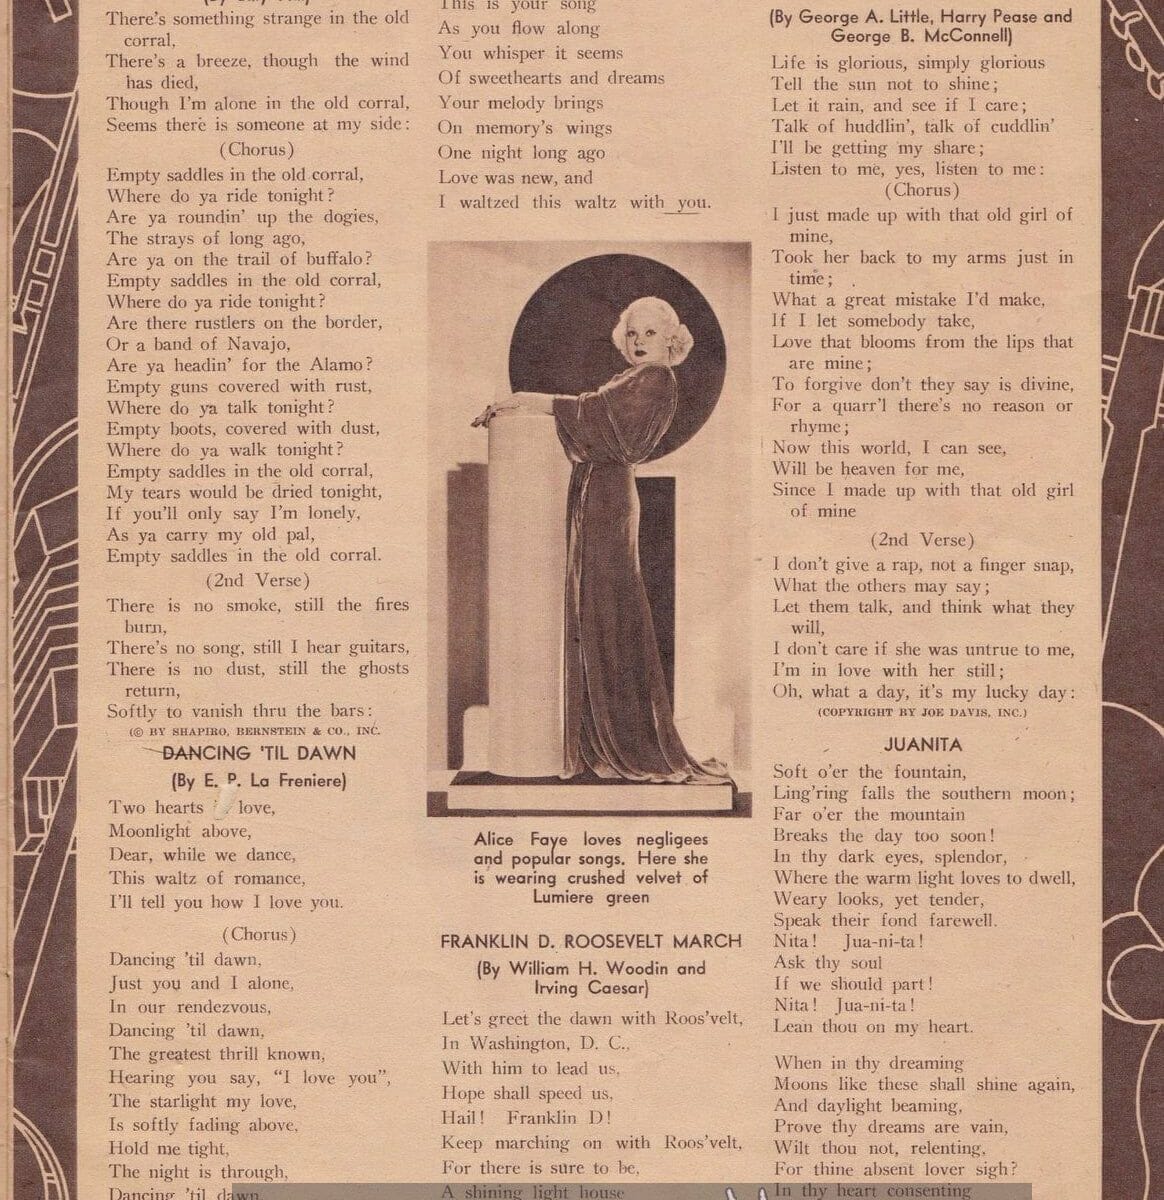 Lyrics to popular 1930s songs pt1